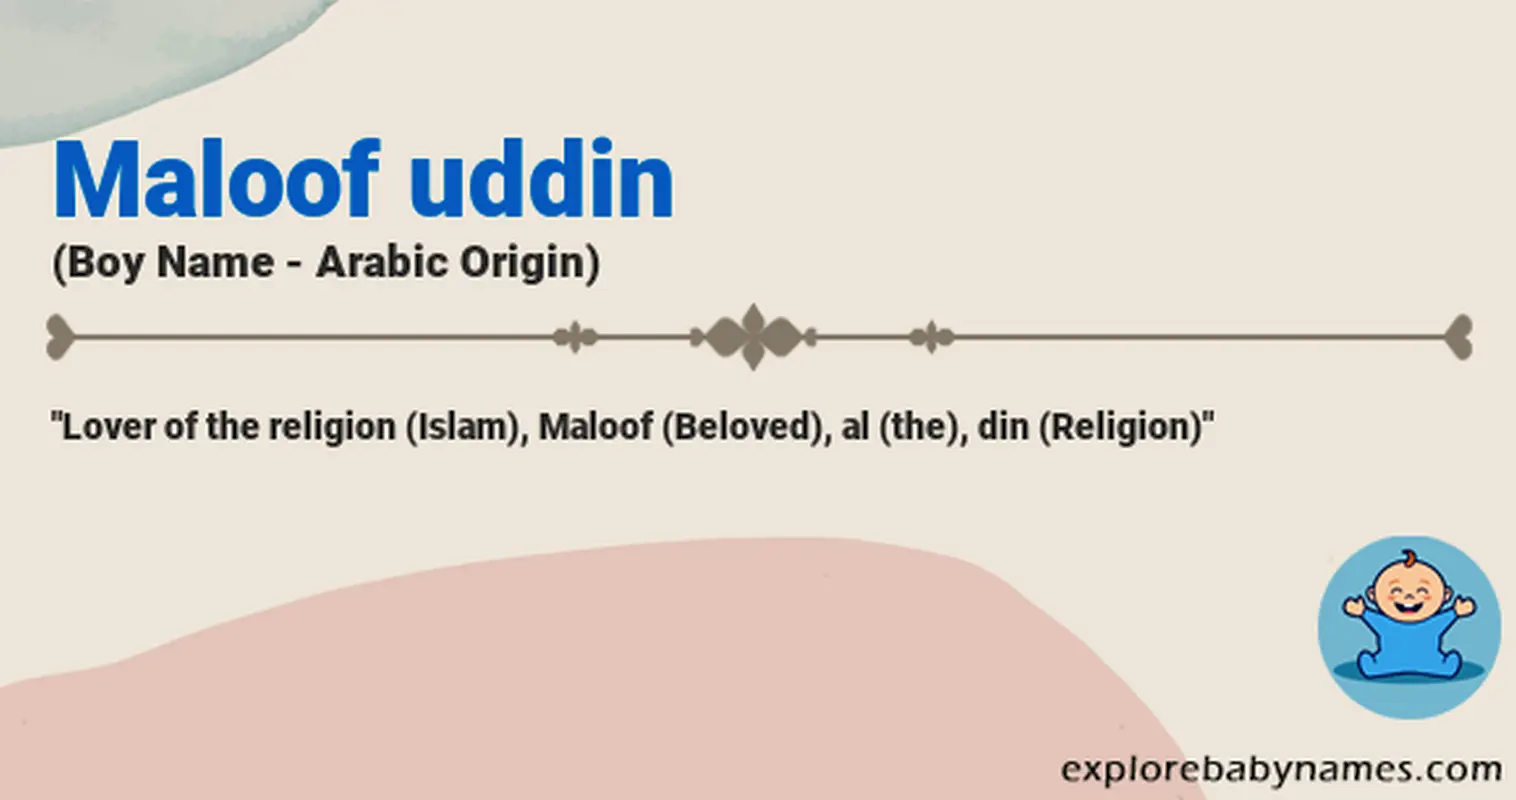 Meaning of Maloof uddin